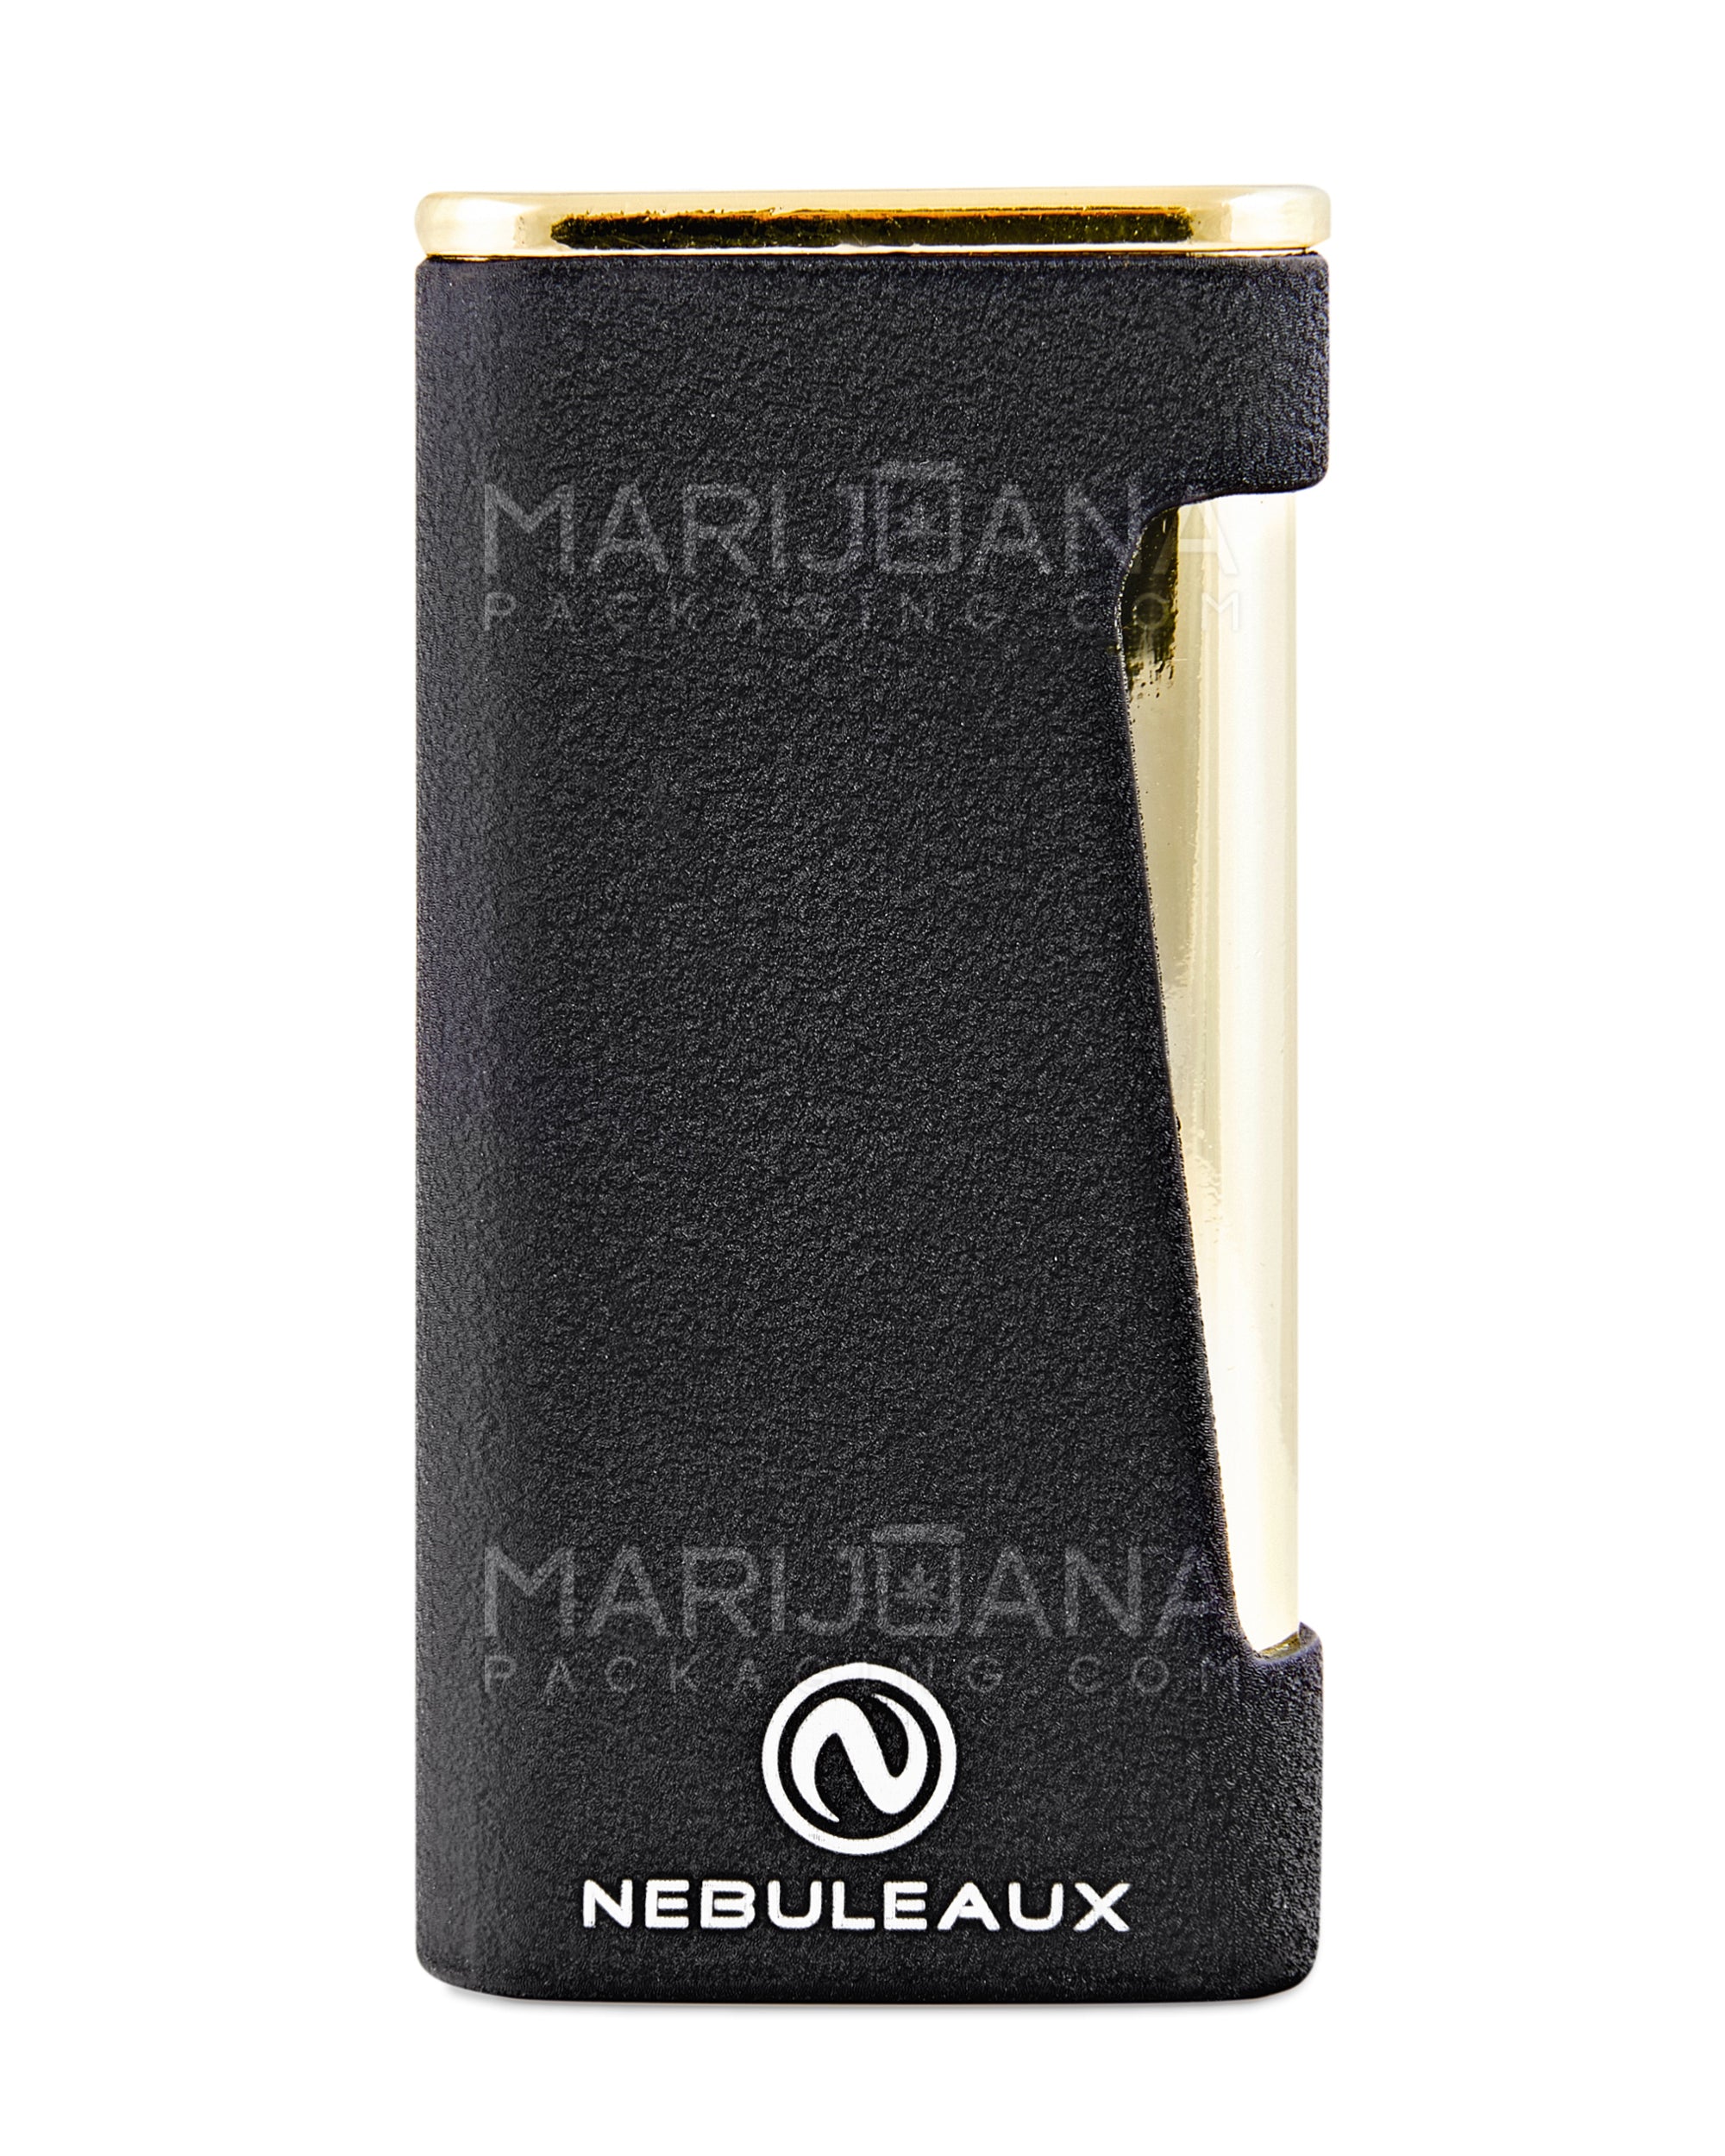 NEBULEAUX | Adjustable Blue Flame Torch Lighter | 2.5in Tall - Butane - Matte Black - 1